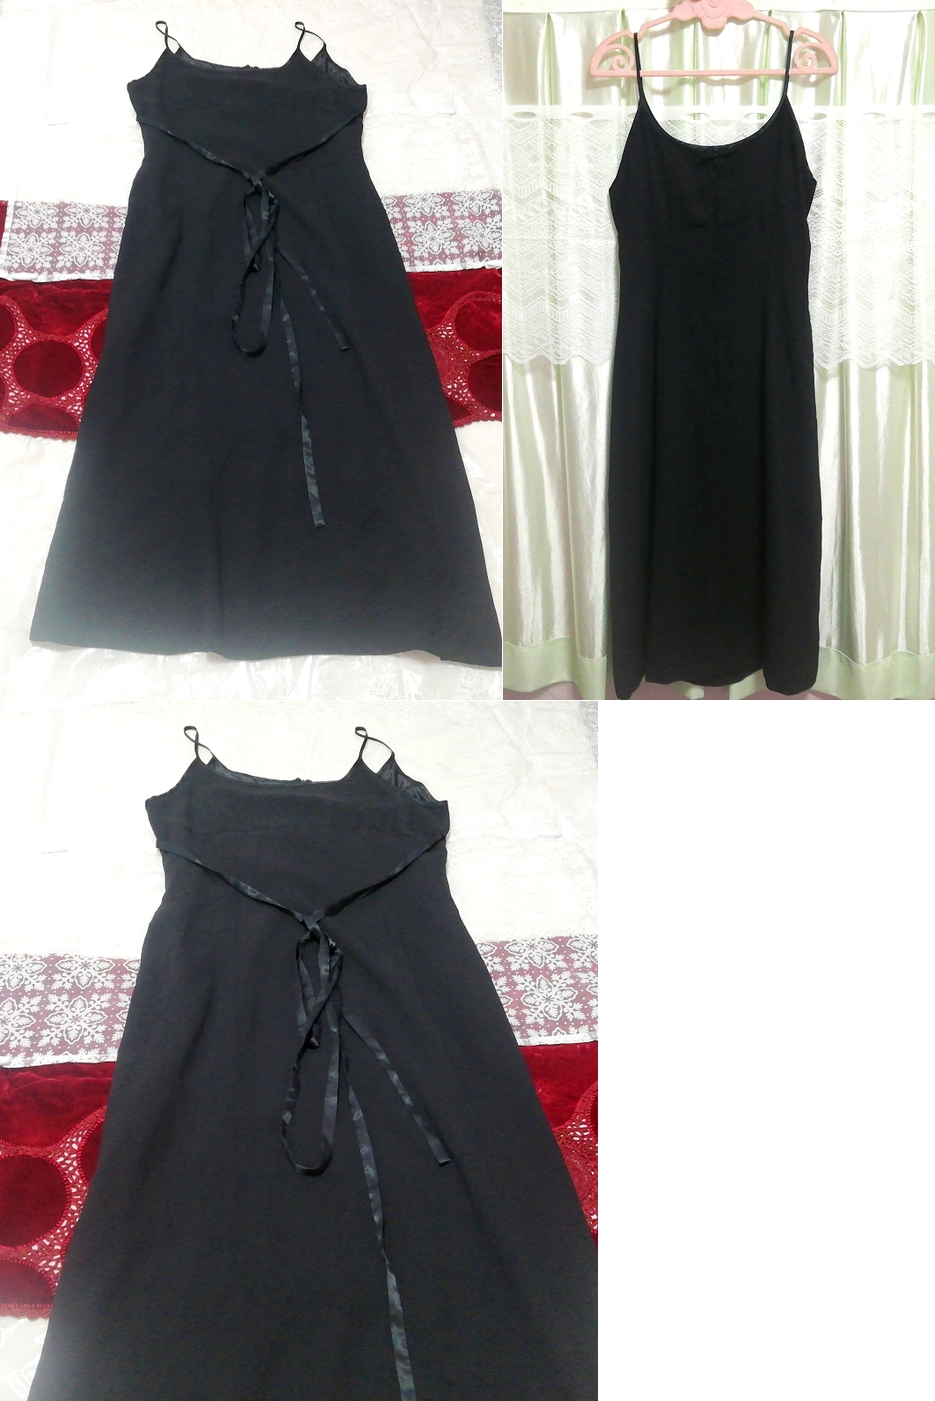 Black chiffon negligee nightgown ribbon camisole babydoll dress, fashion, ladies' fashion, camisole